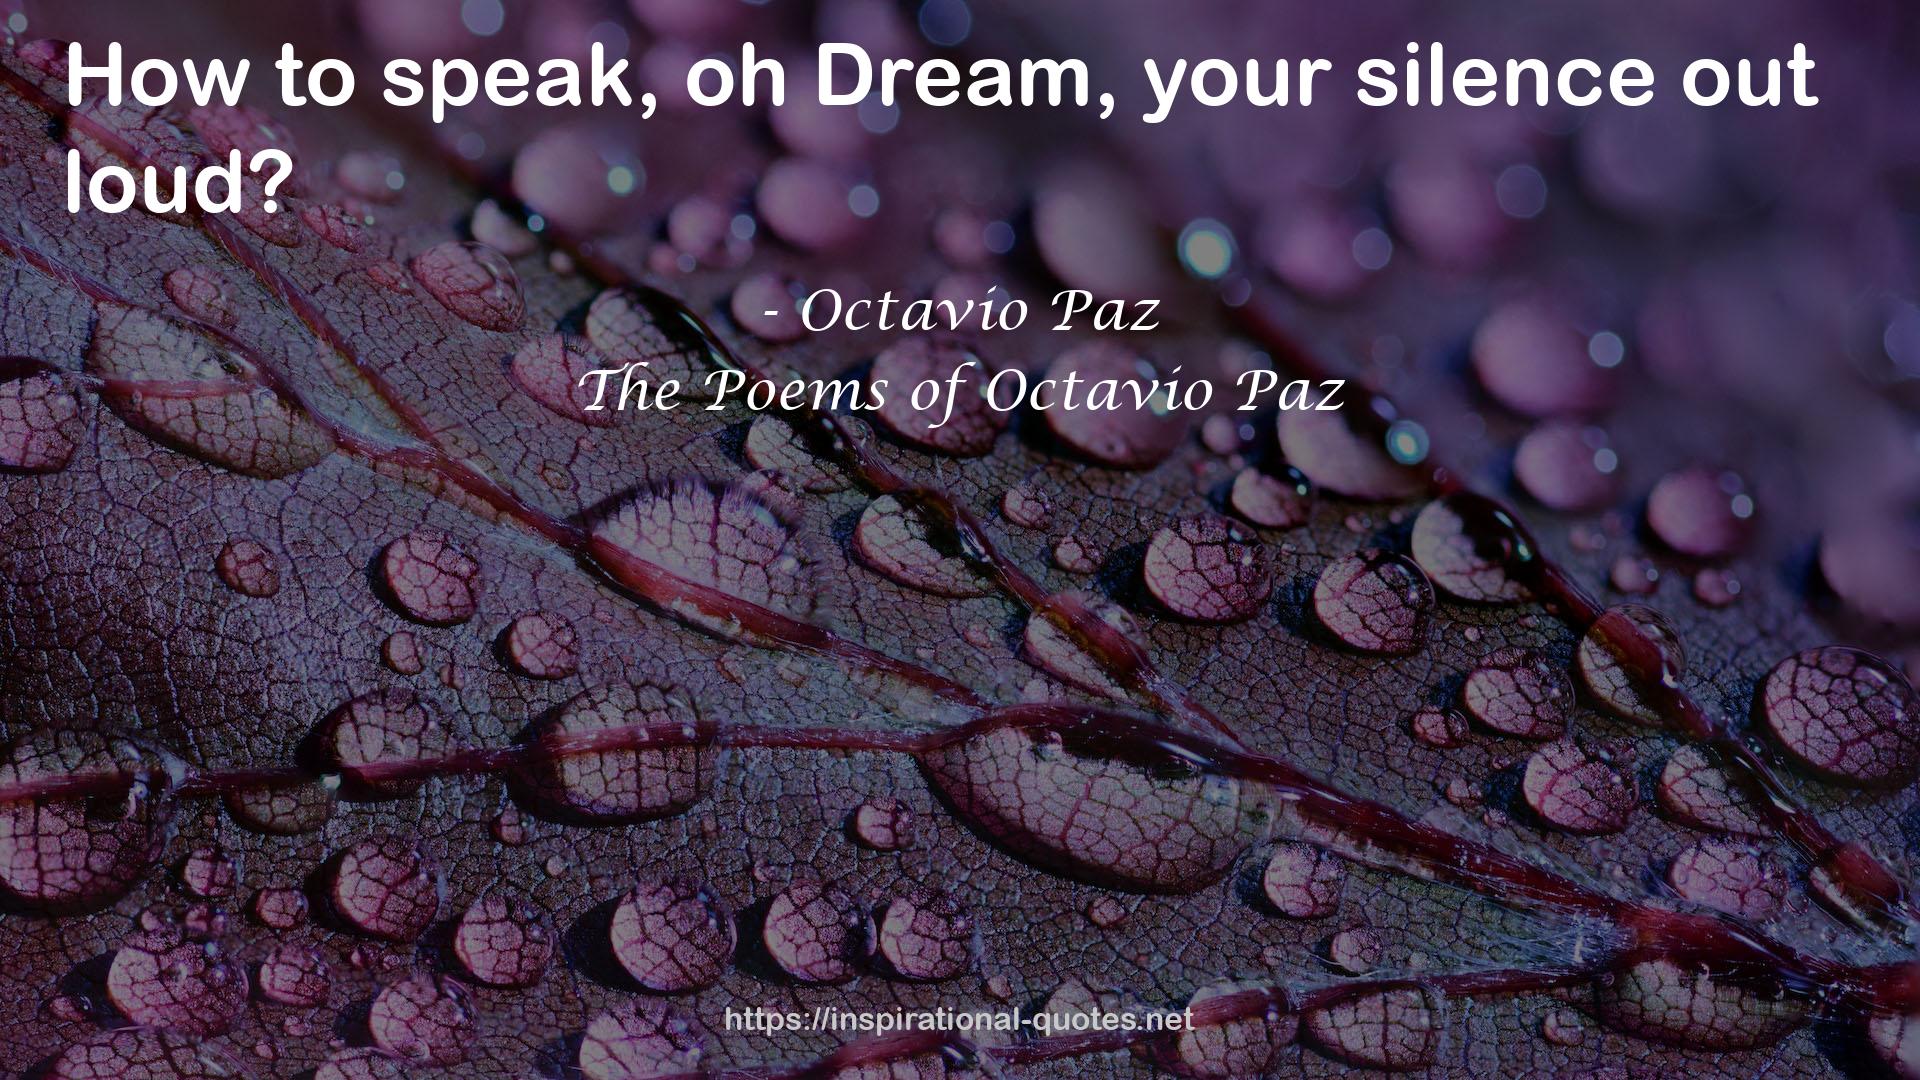 The Poems of Octavio Paz QUOTES